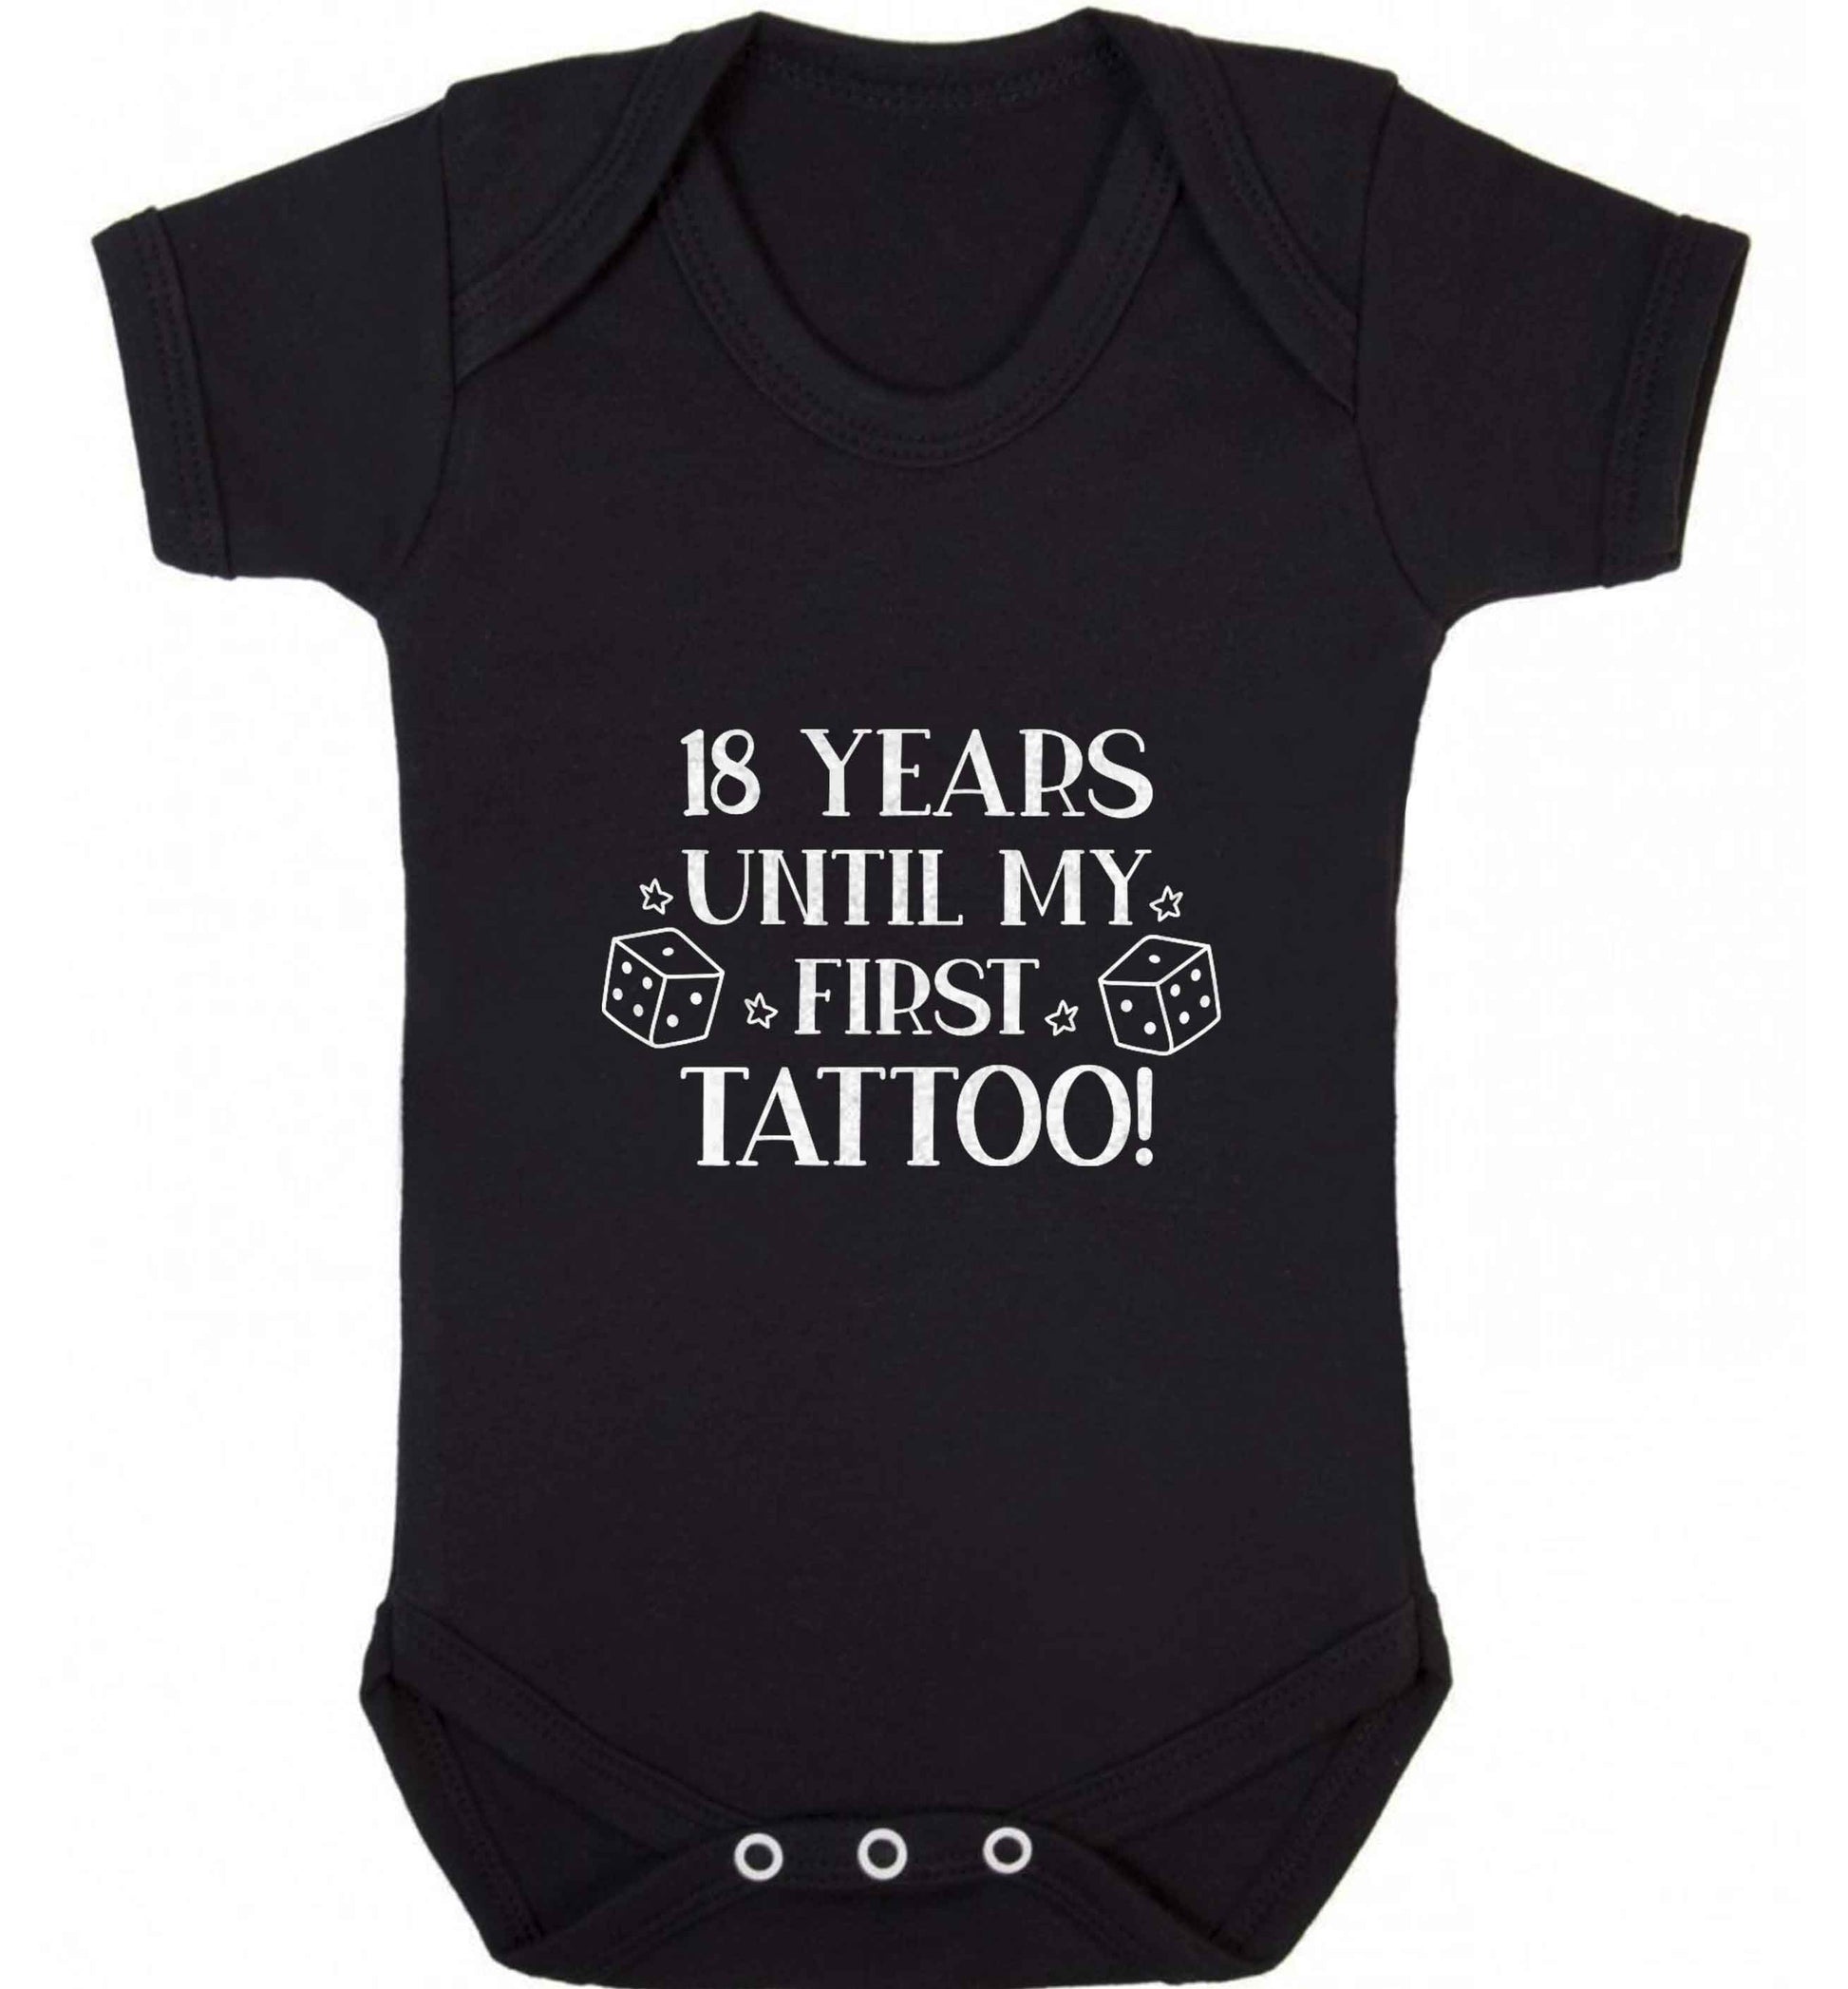 18 Years Until my First Tattoo baby vest black 18-24 months